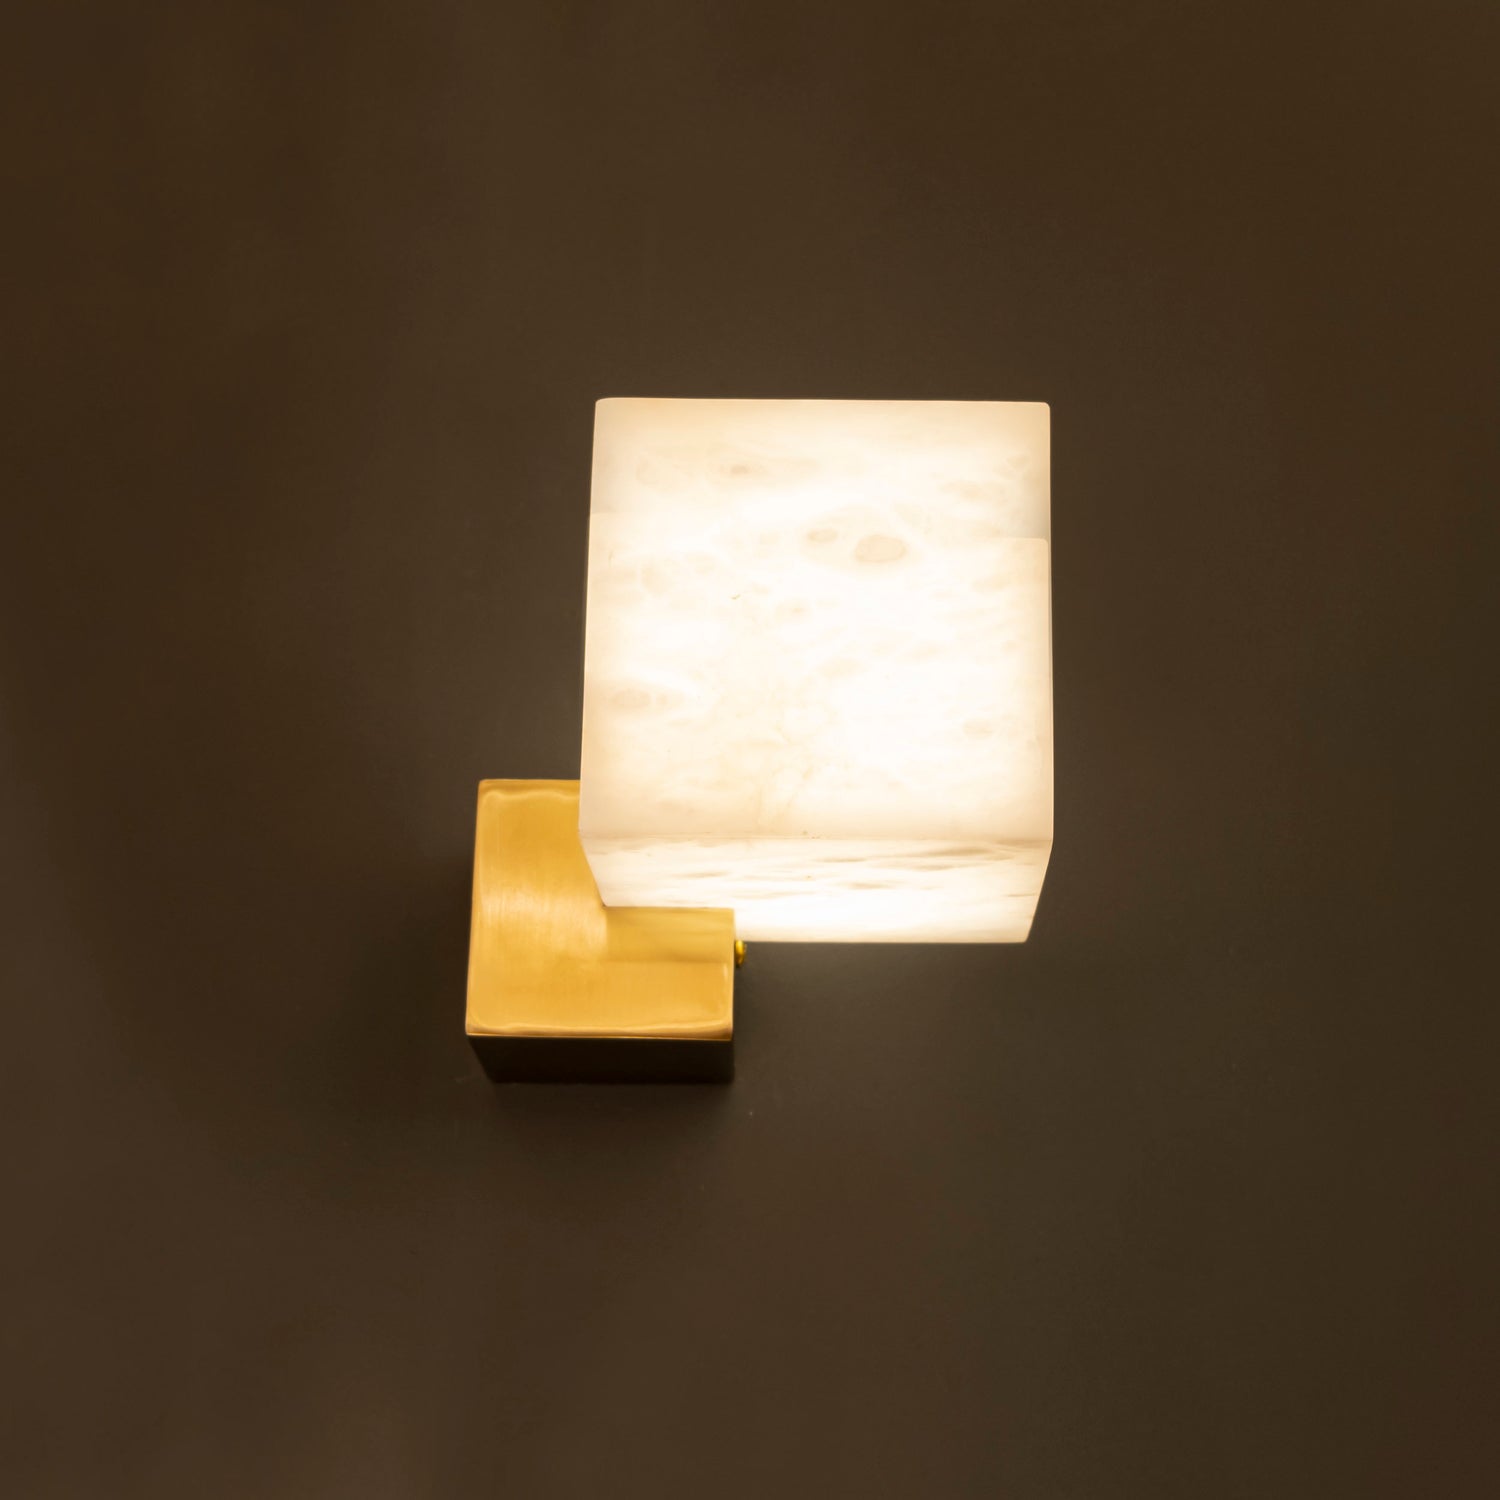 Cube Marble Wall Lamp for Entryways or Bedrooms Brass Sconce, Handmade LED Light, Vanity Wall Lighting, Art Deco Lighting, MODEL: DORIS